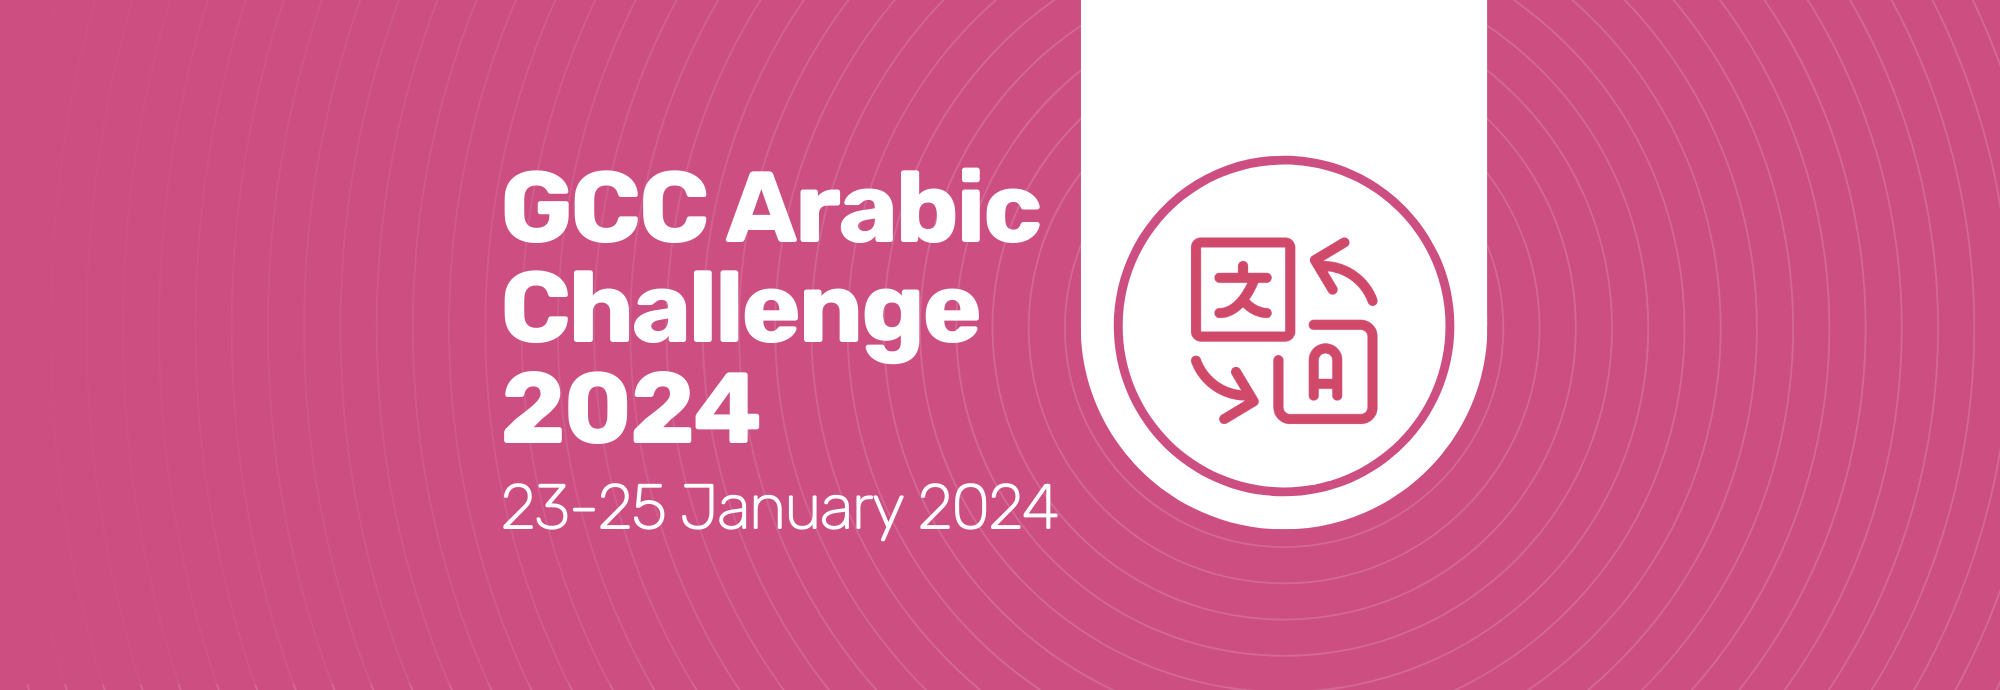 EP GCC Arabic Challenge 2024